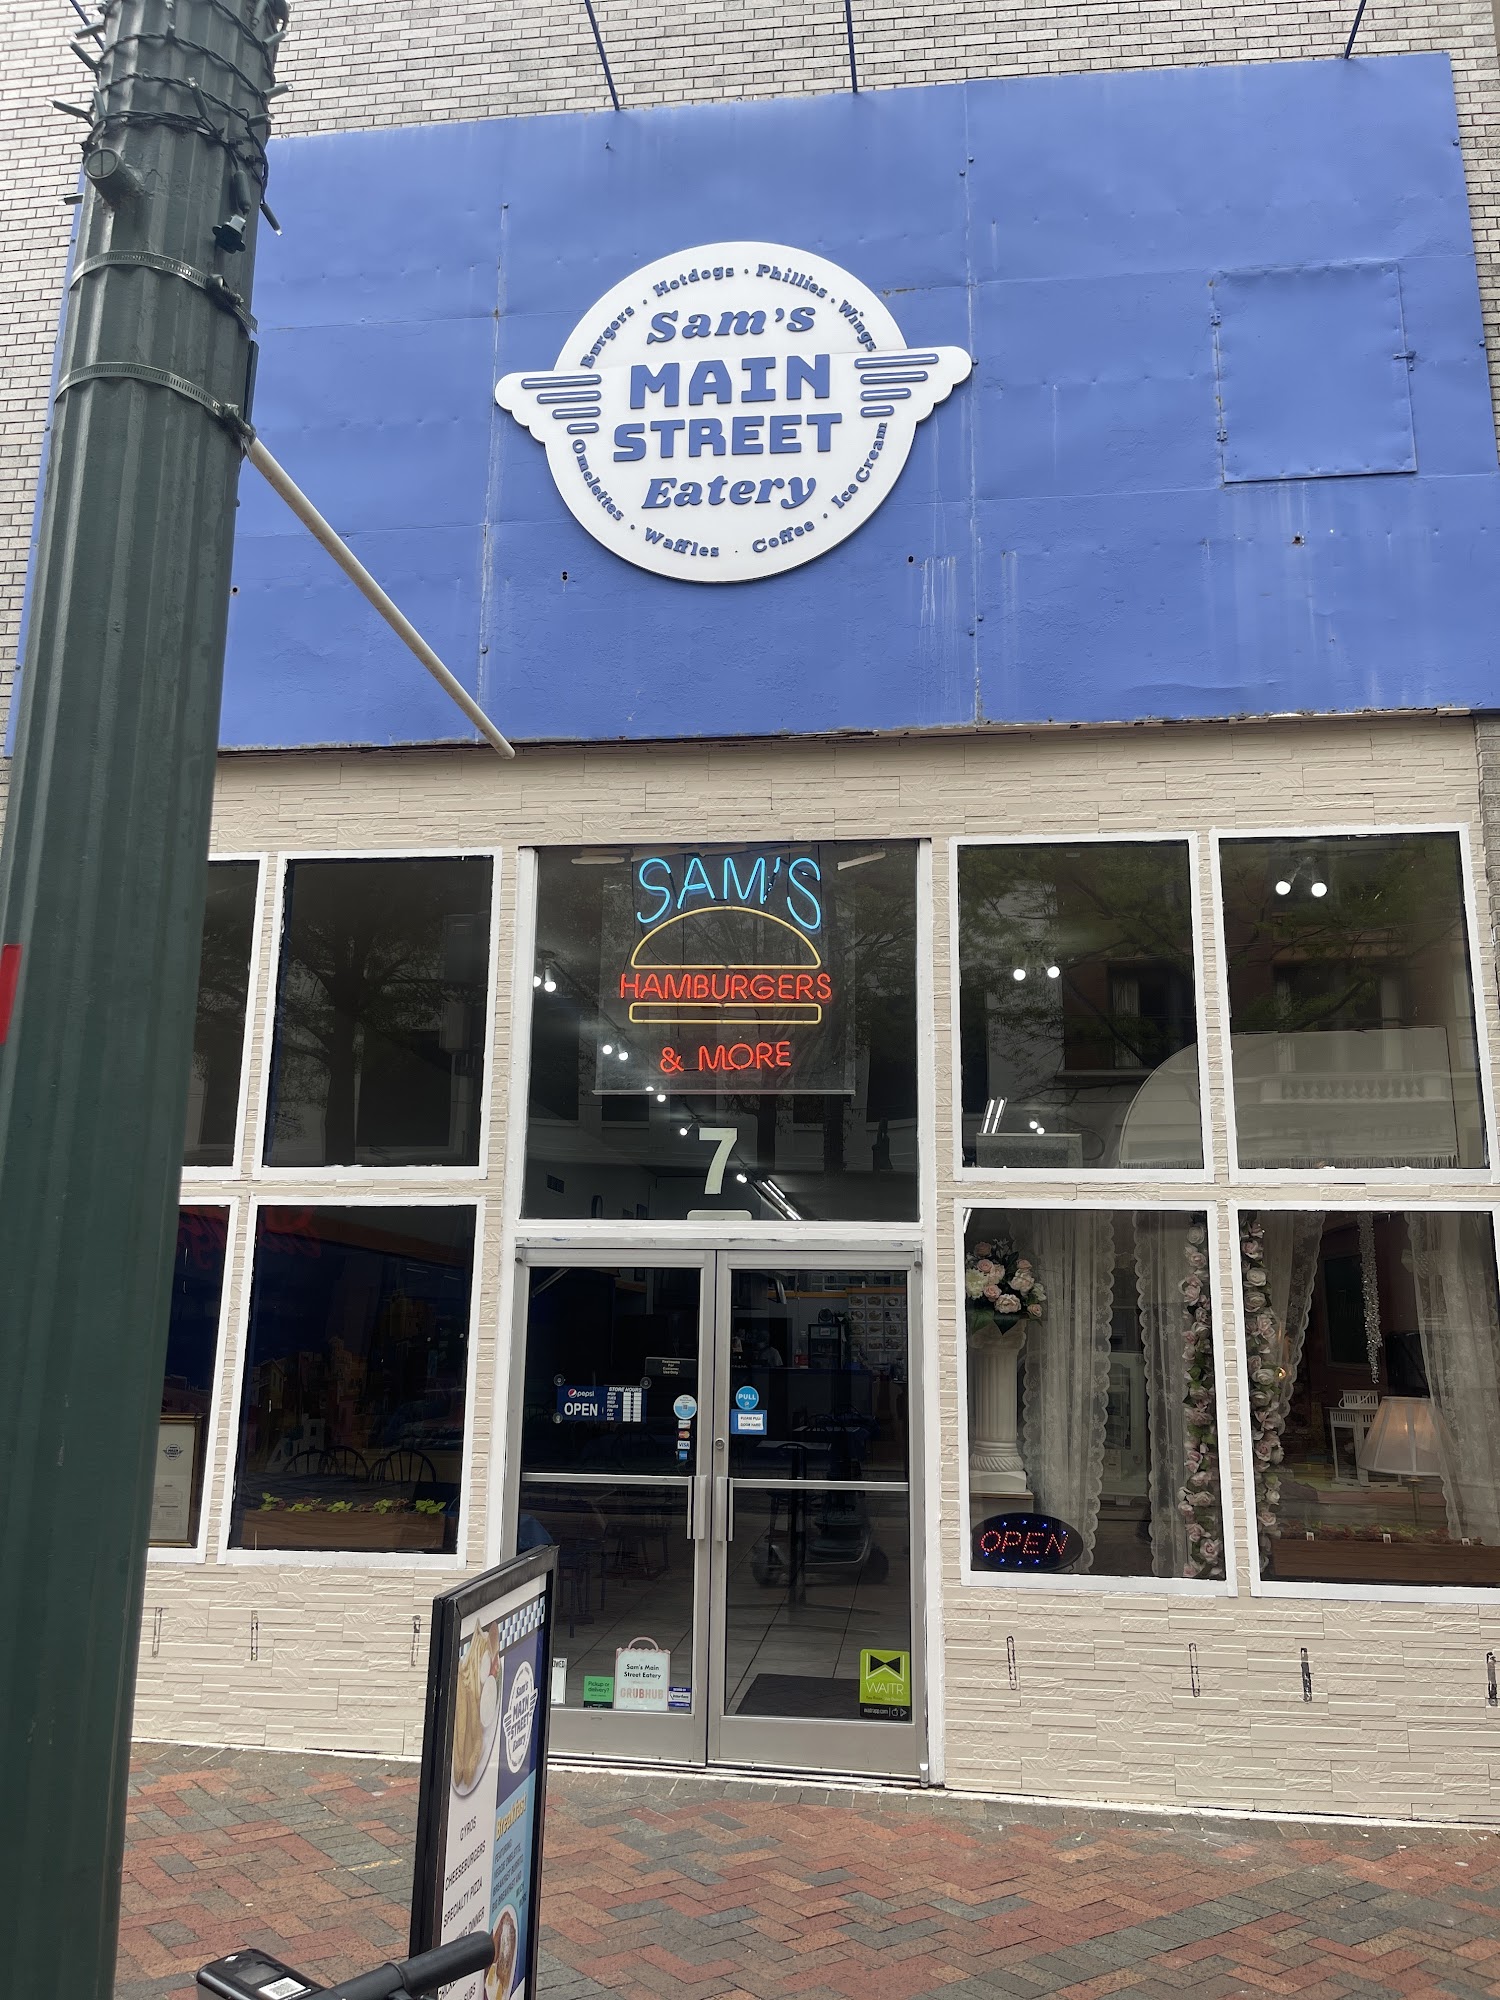 Sam's Main Street Eatery